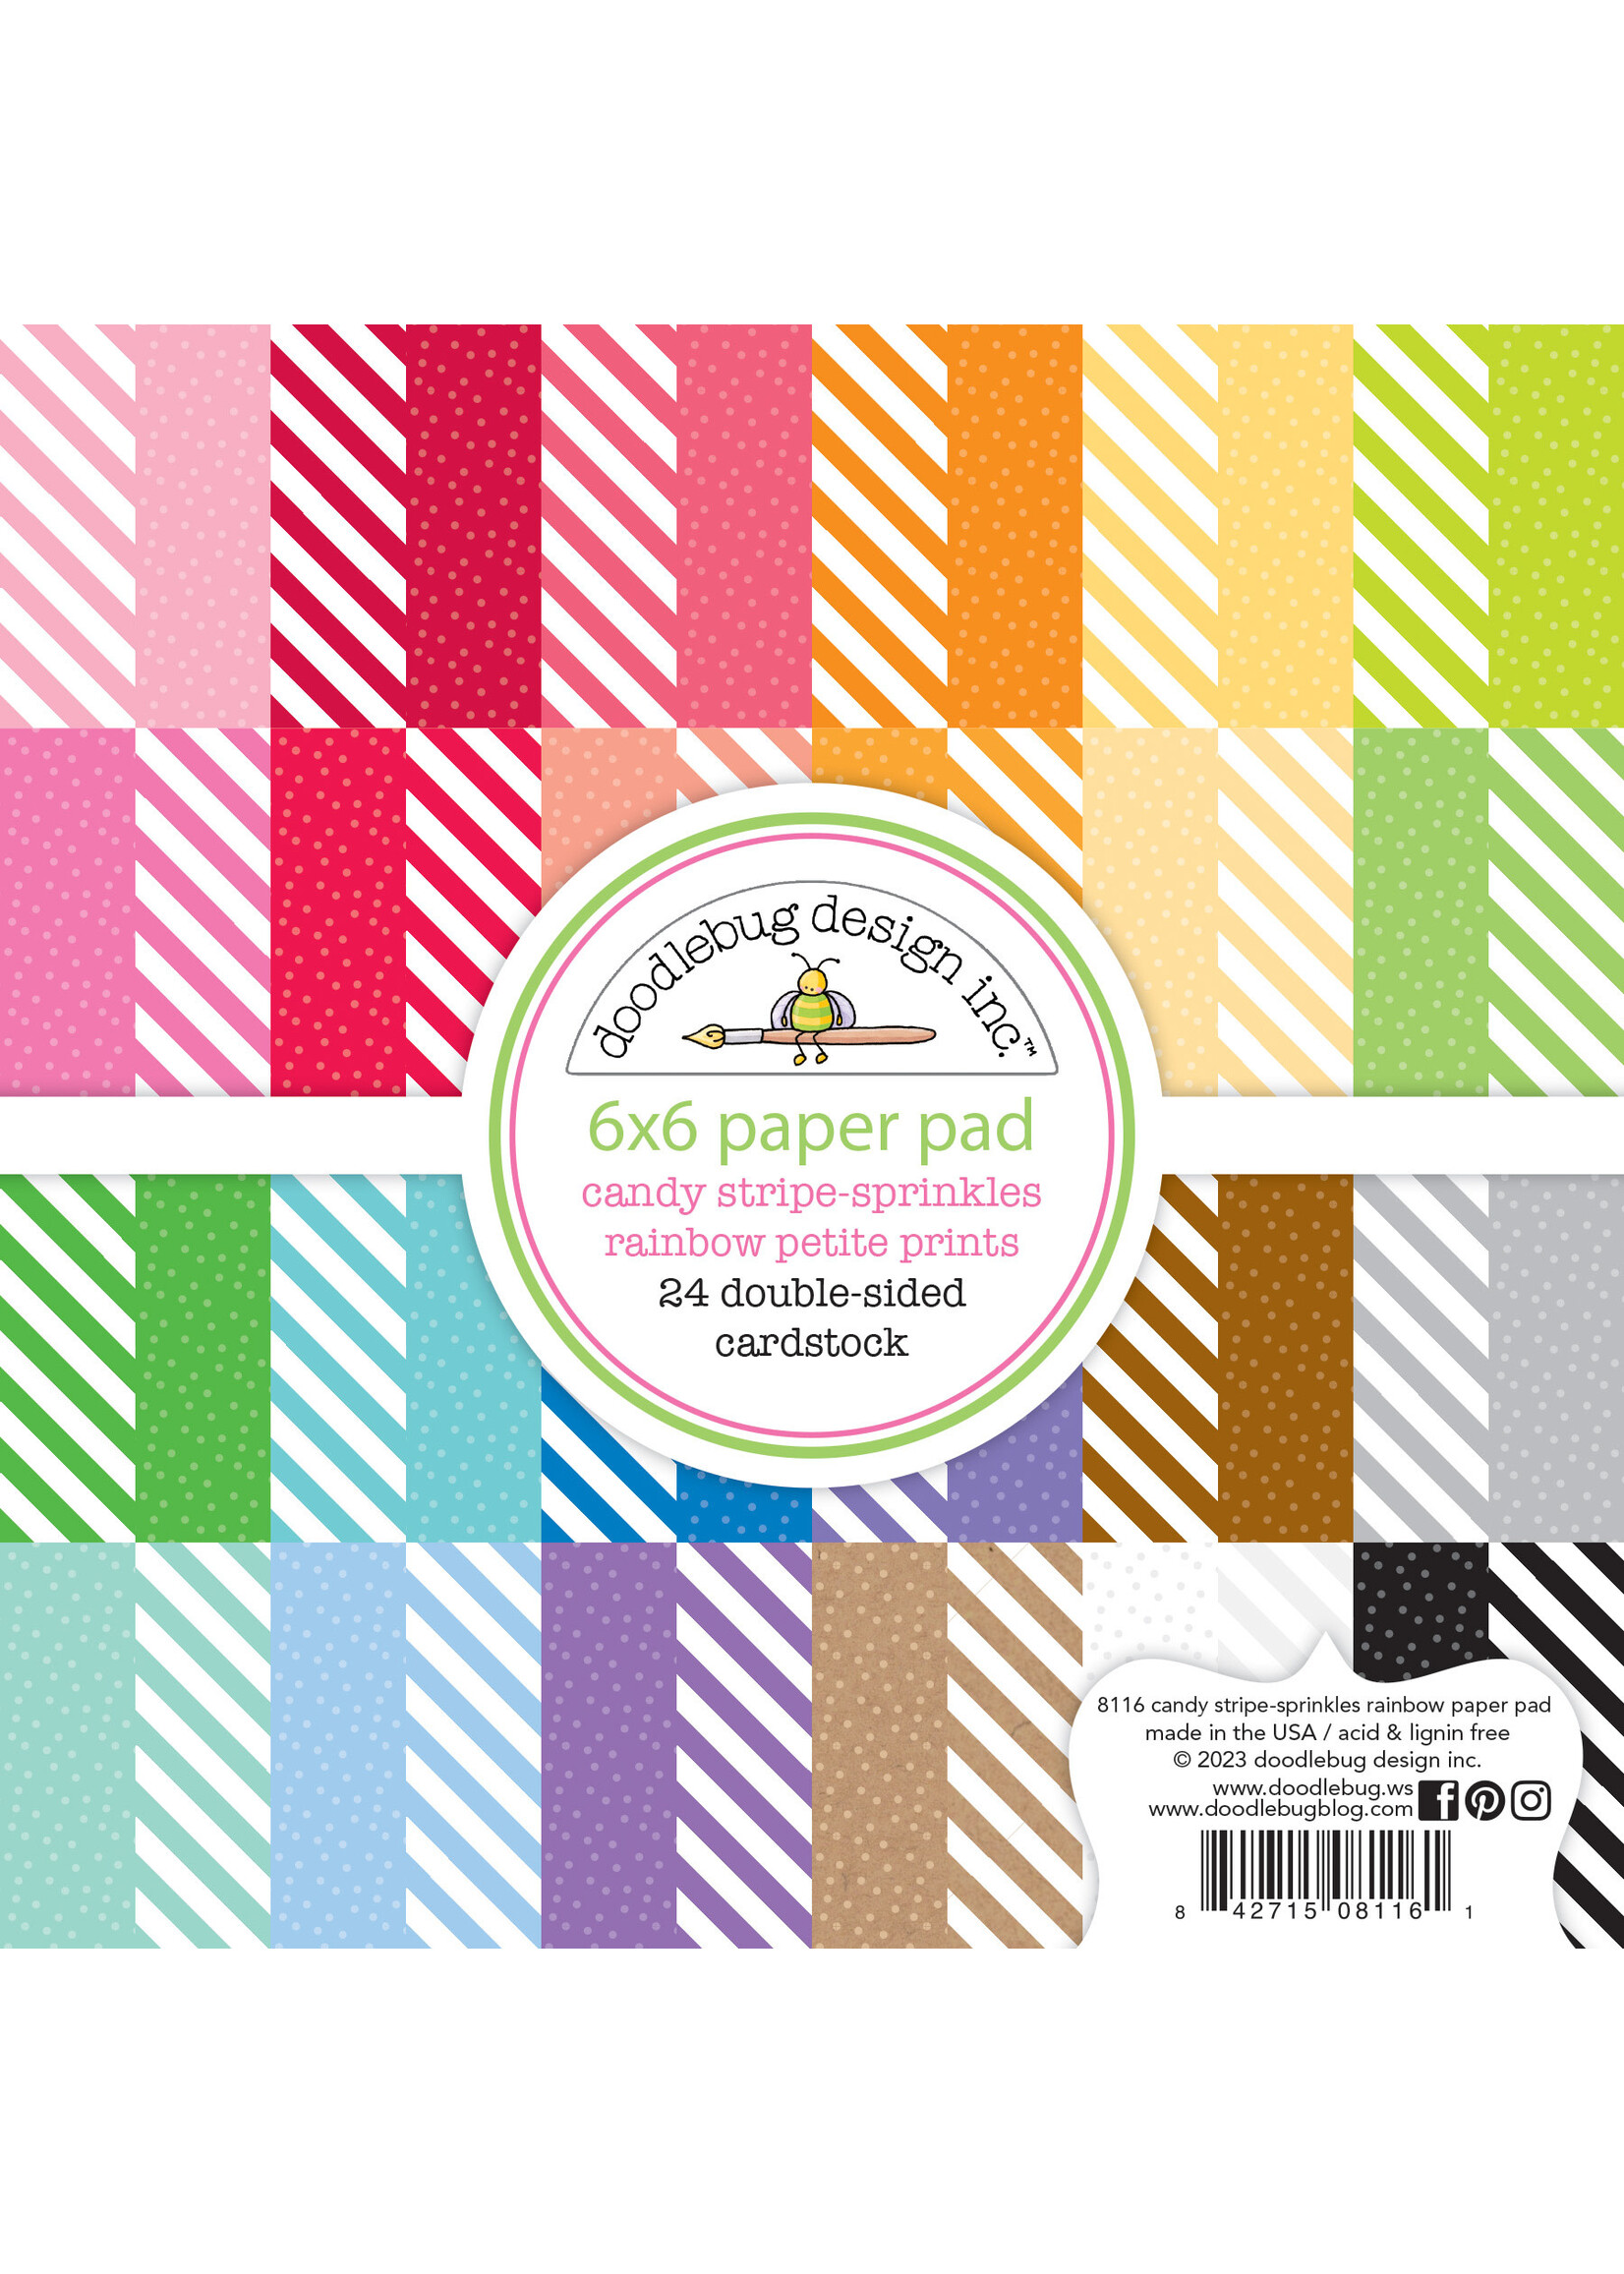 DOODLEBUG Candy Stripe-Sprinkles Rainbow Petite Prints 6x6 Pad